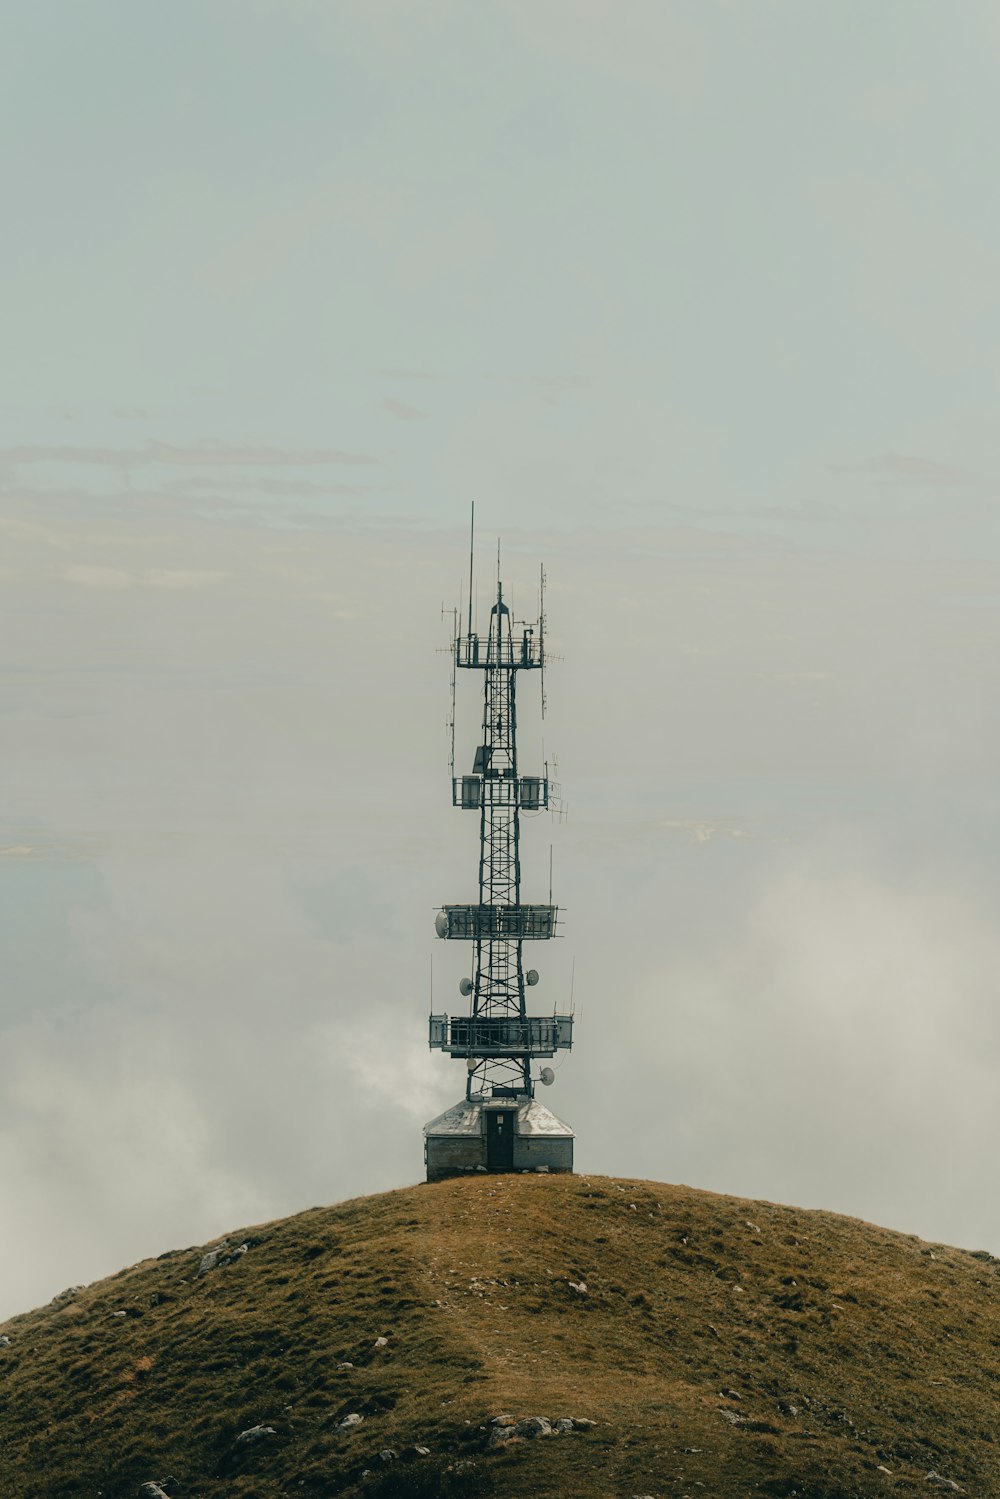 una torre de telefonía celular en la cima de una colina